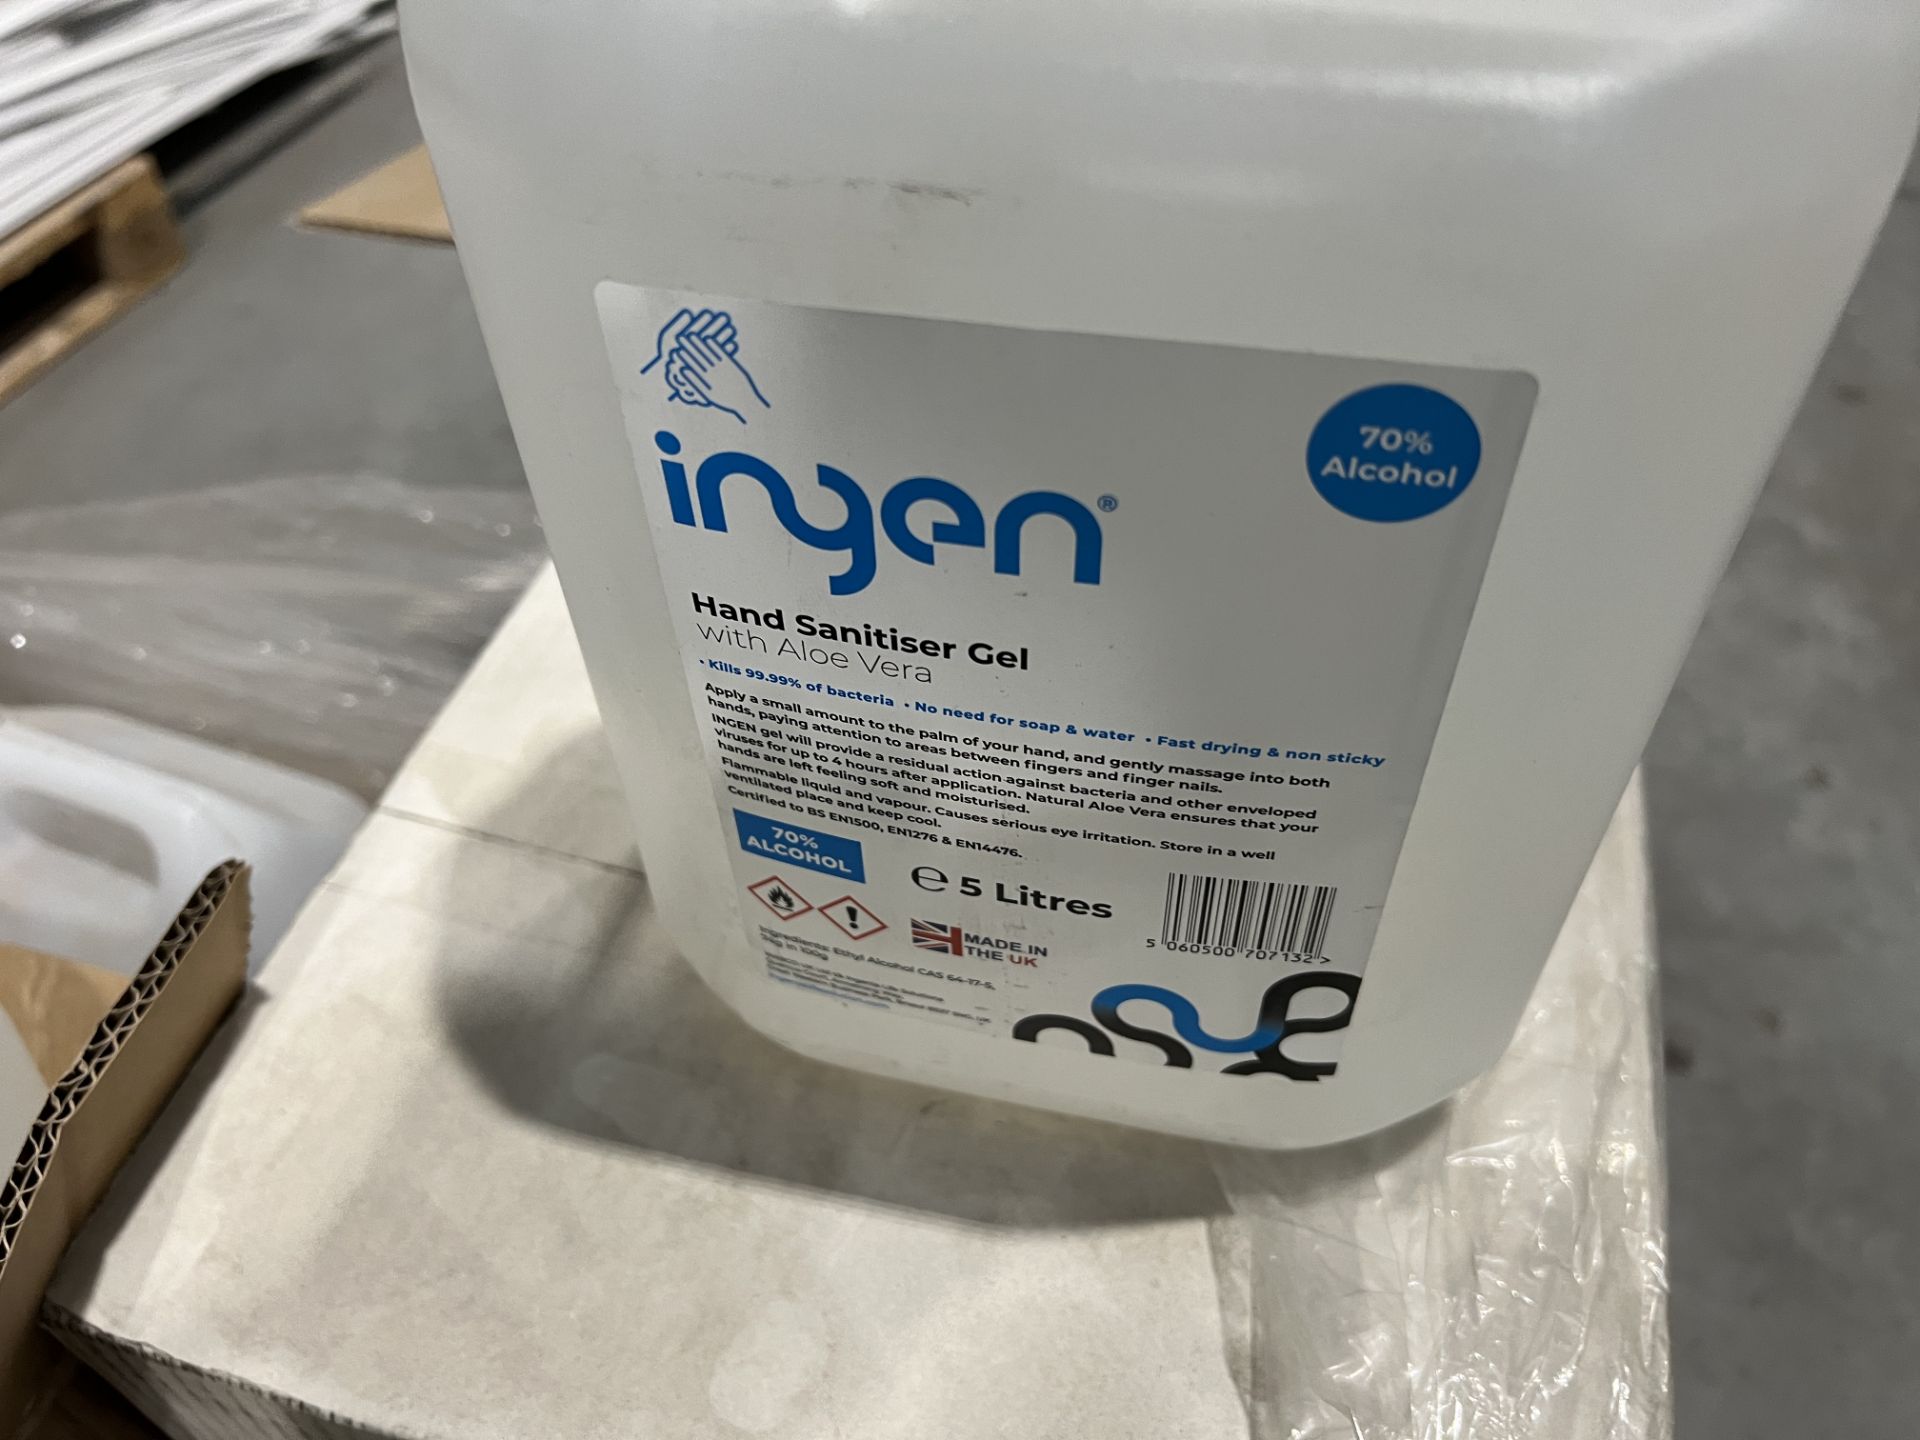 Qty 30 5 Ltr bottles of Ingen hand sanitiser gel, two par boxes of Uniwap clinical surface wipes and - Image 2 of 5